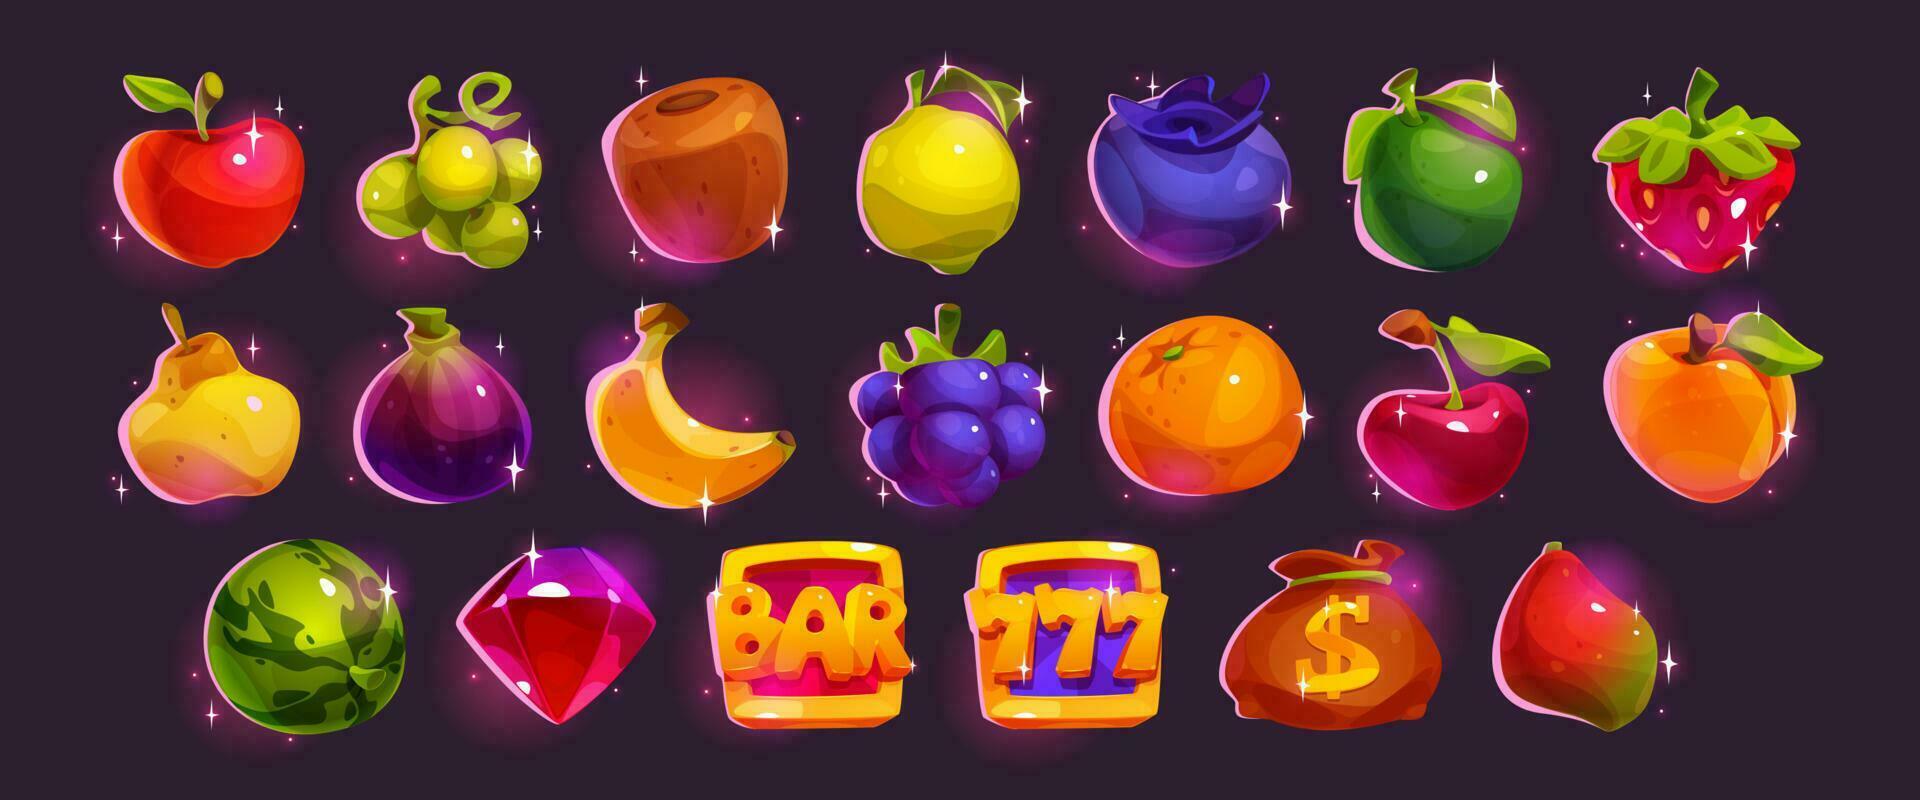 Casino slot machine match game fruit ui icon set vector